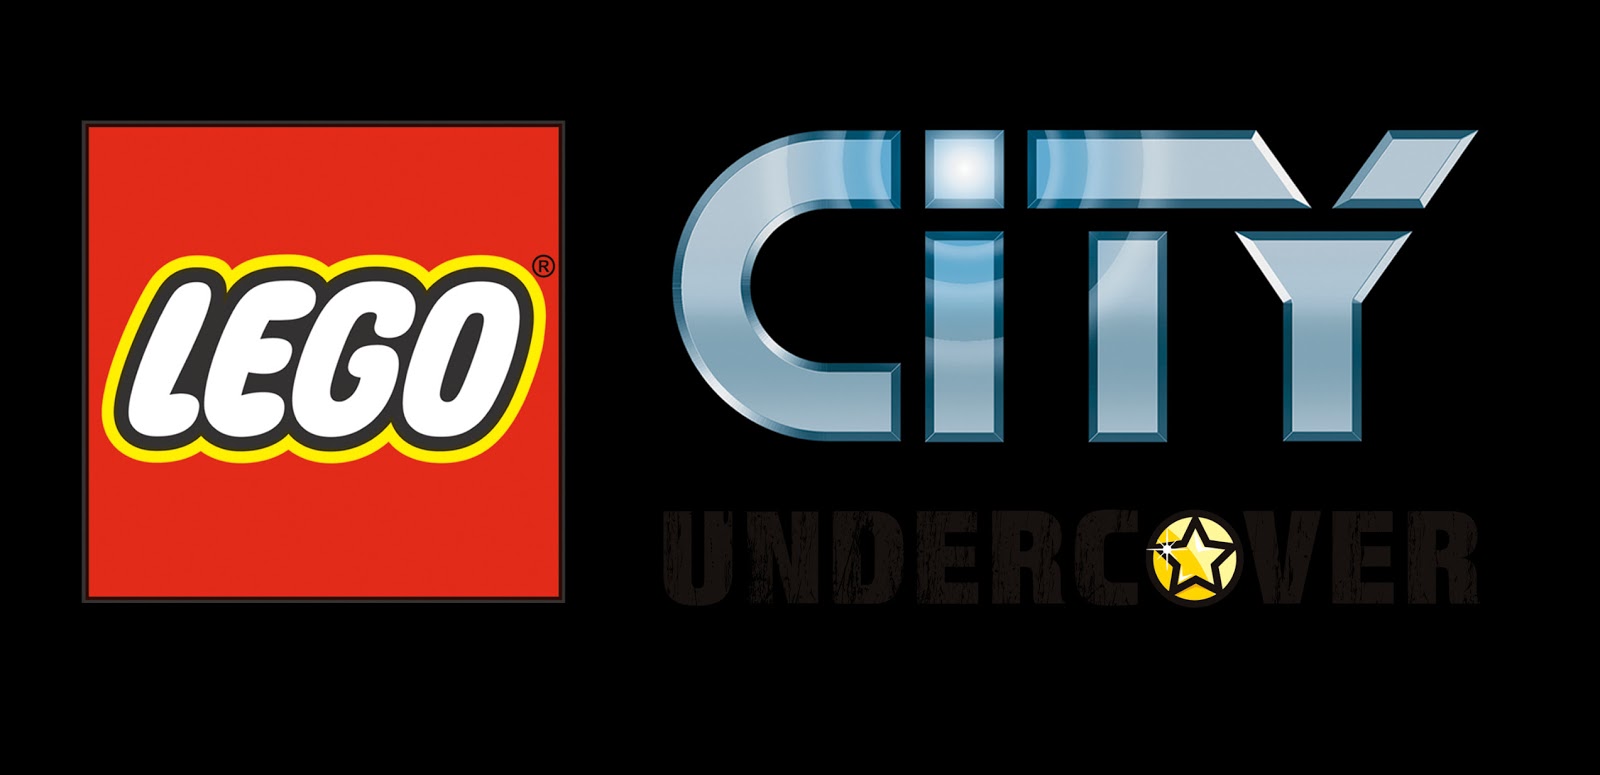 Lego City Undercover review The RetroModern Gaming blog V2.0